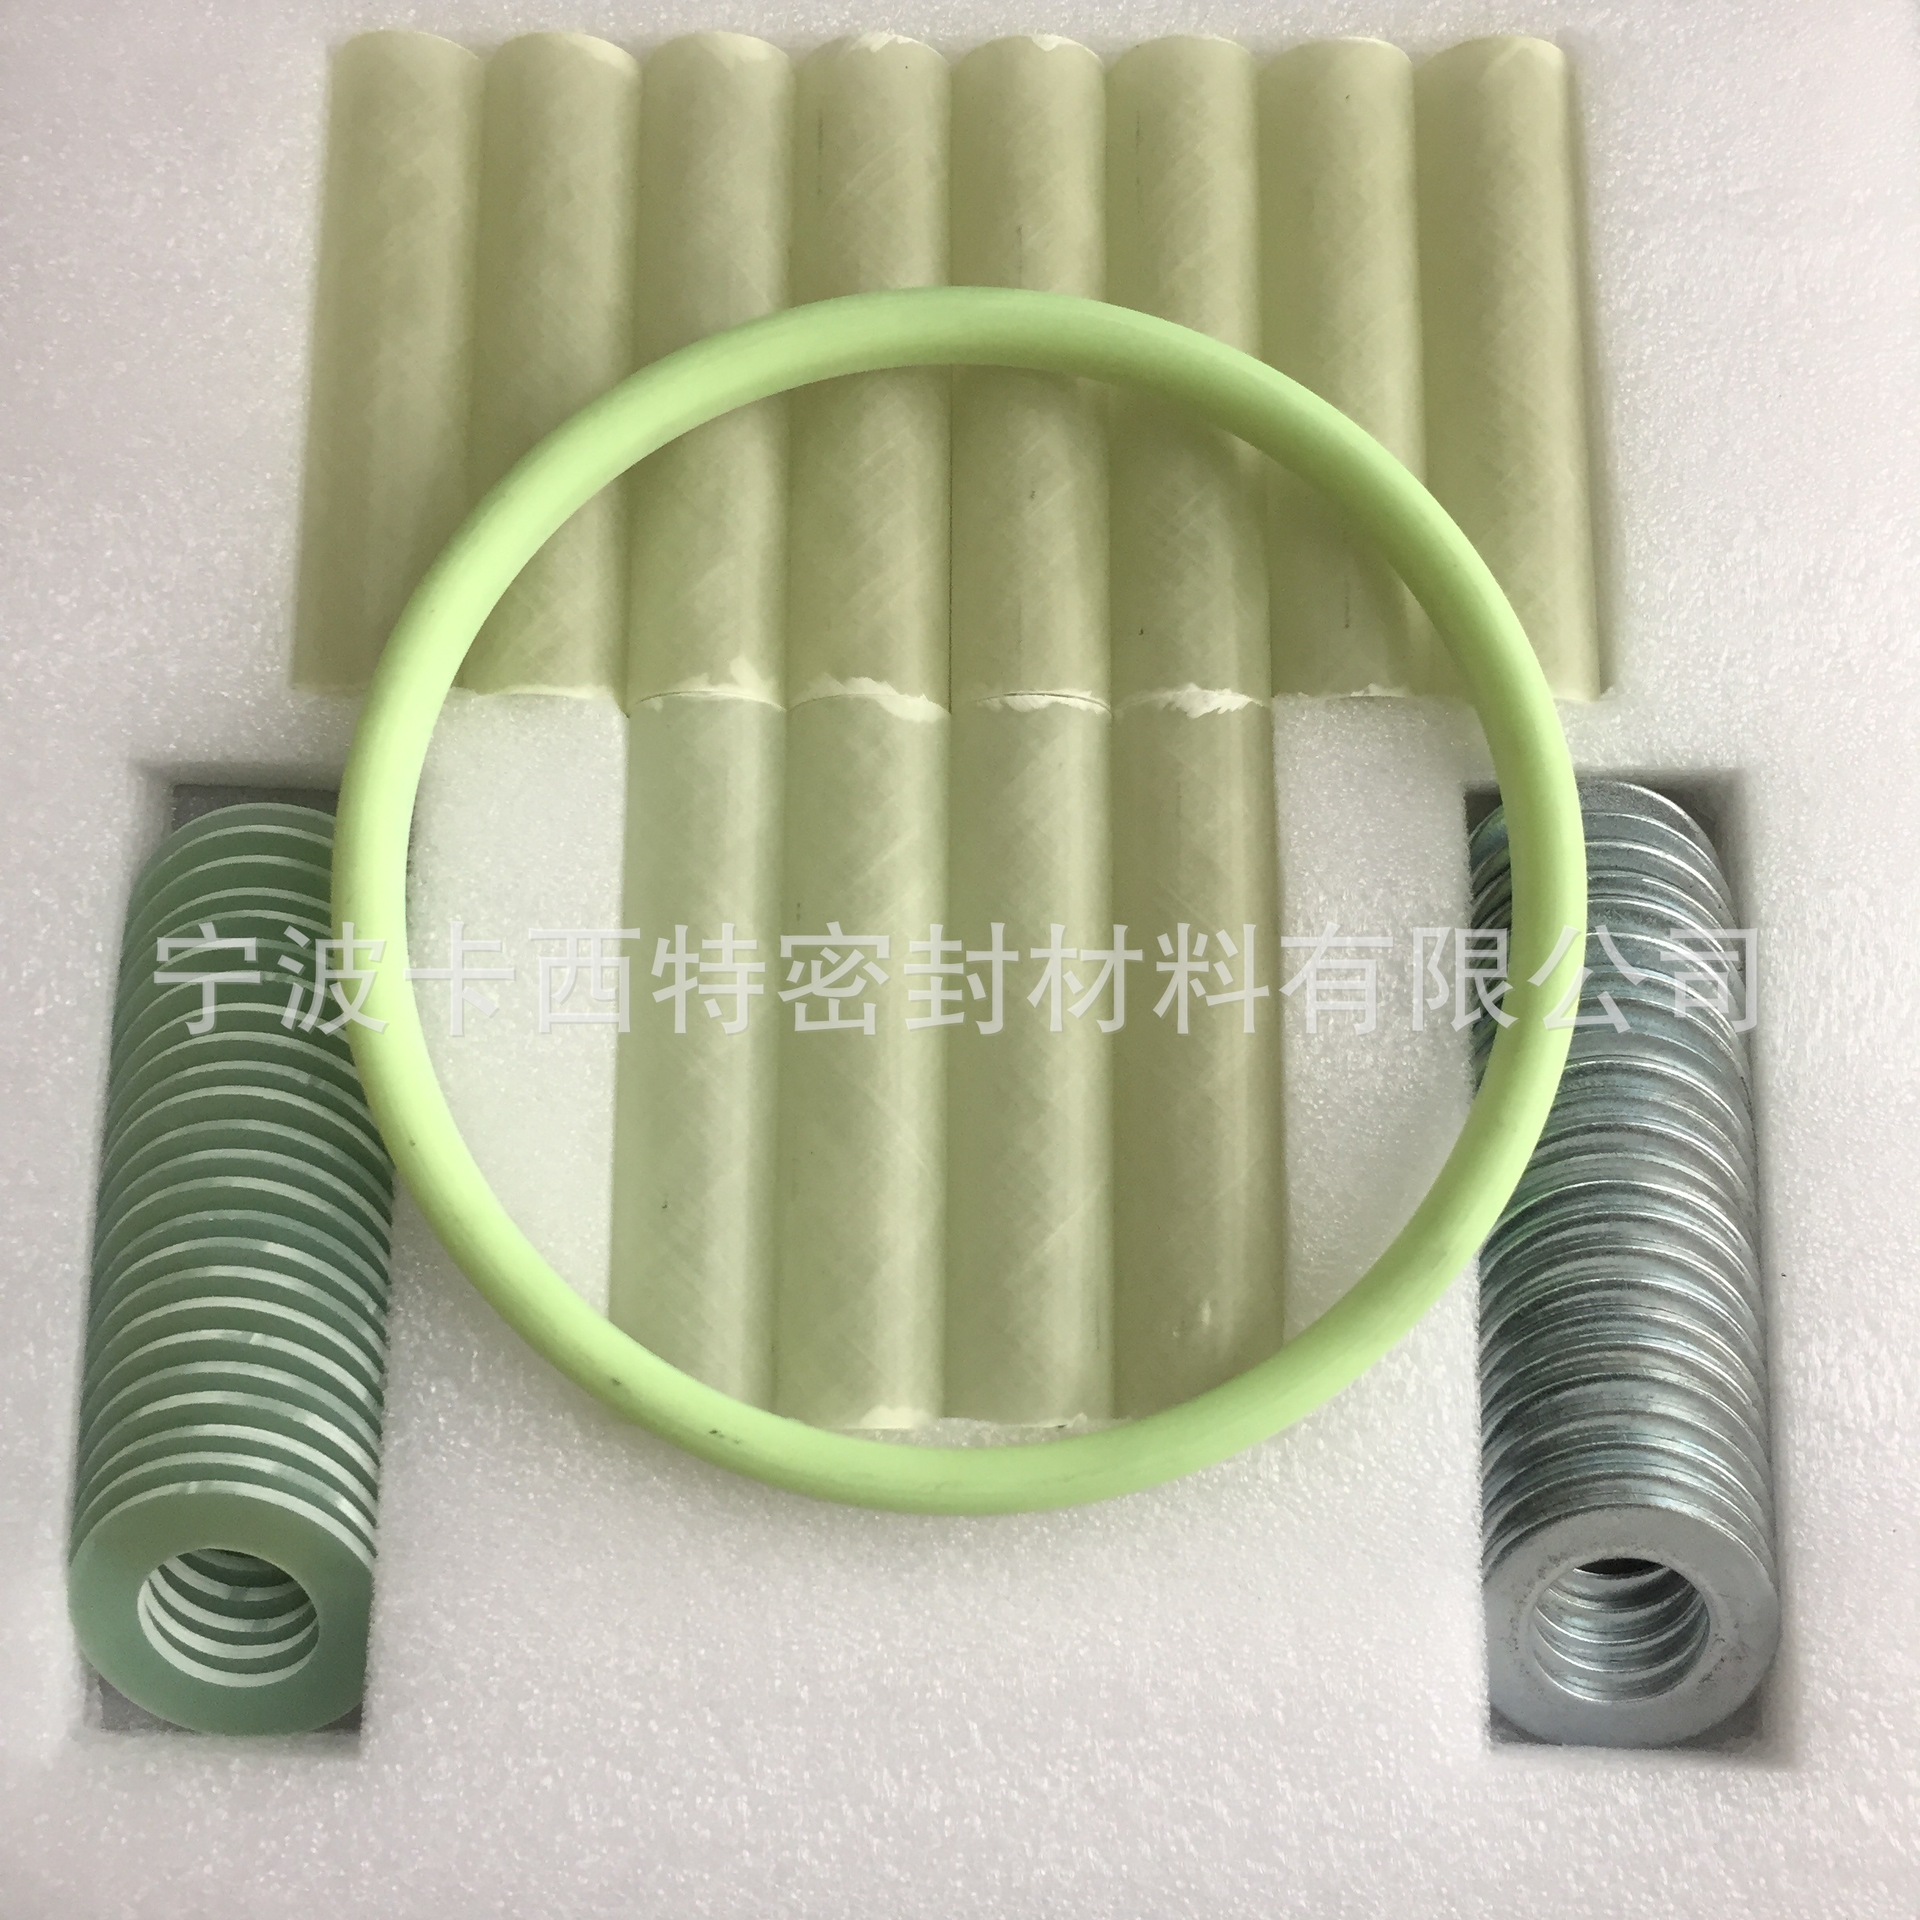 Type D Flange Insulation Gasket Kits